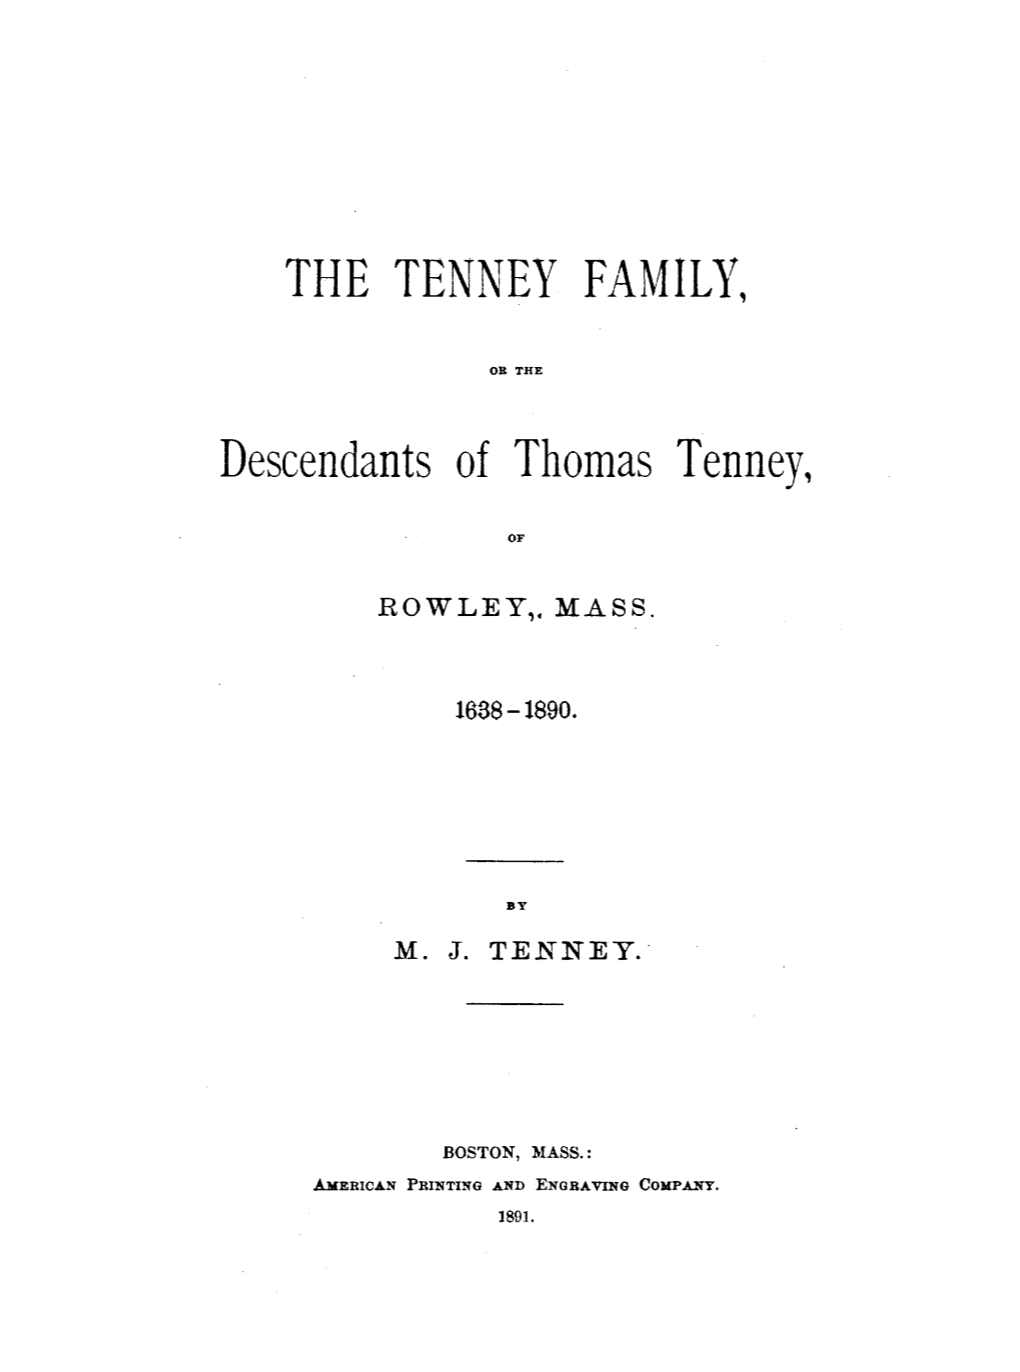 Descendants of Thomas Tenney